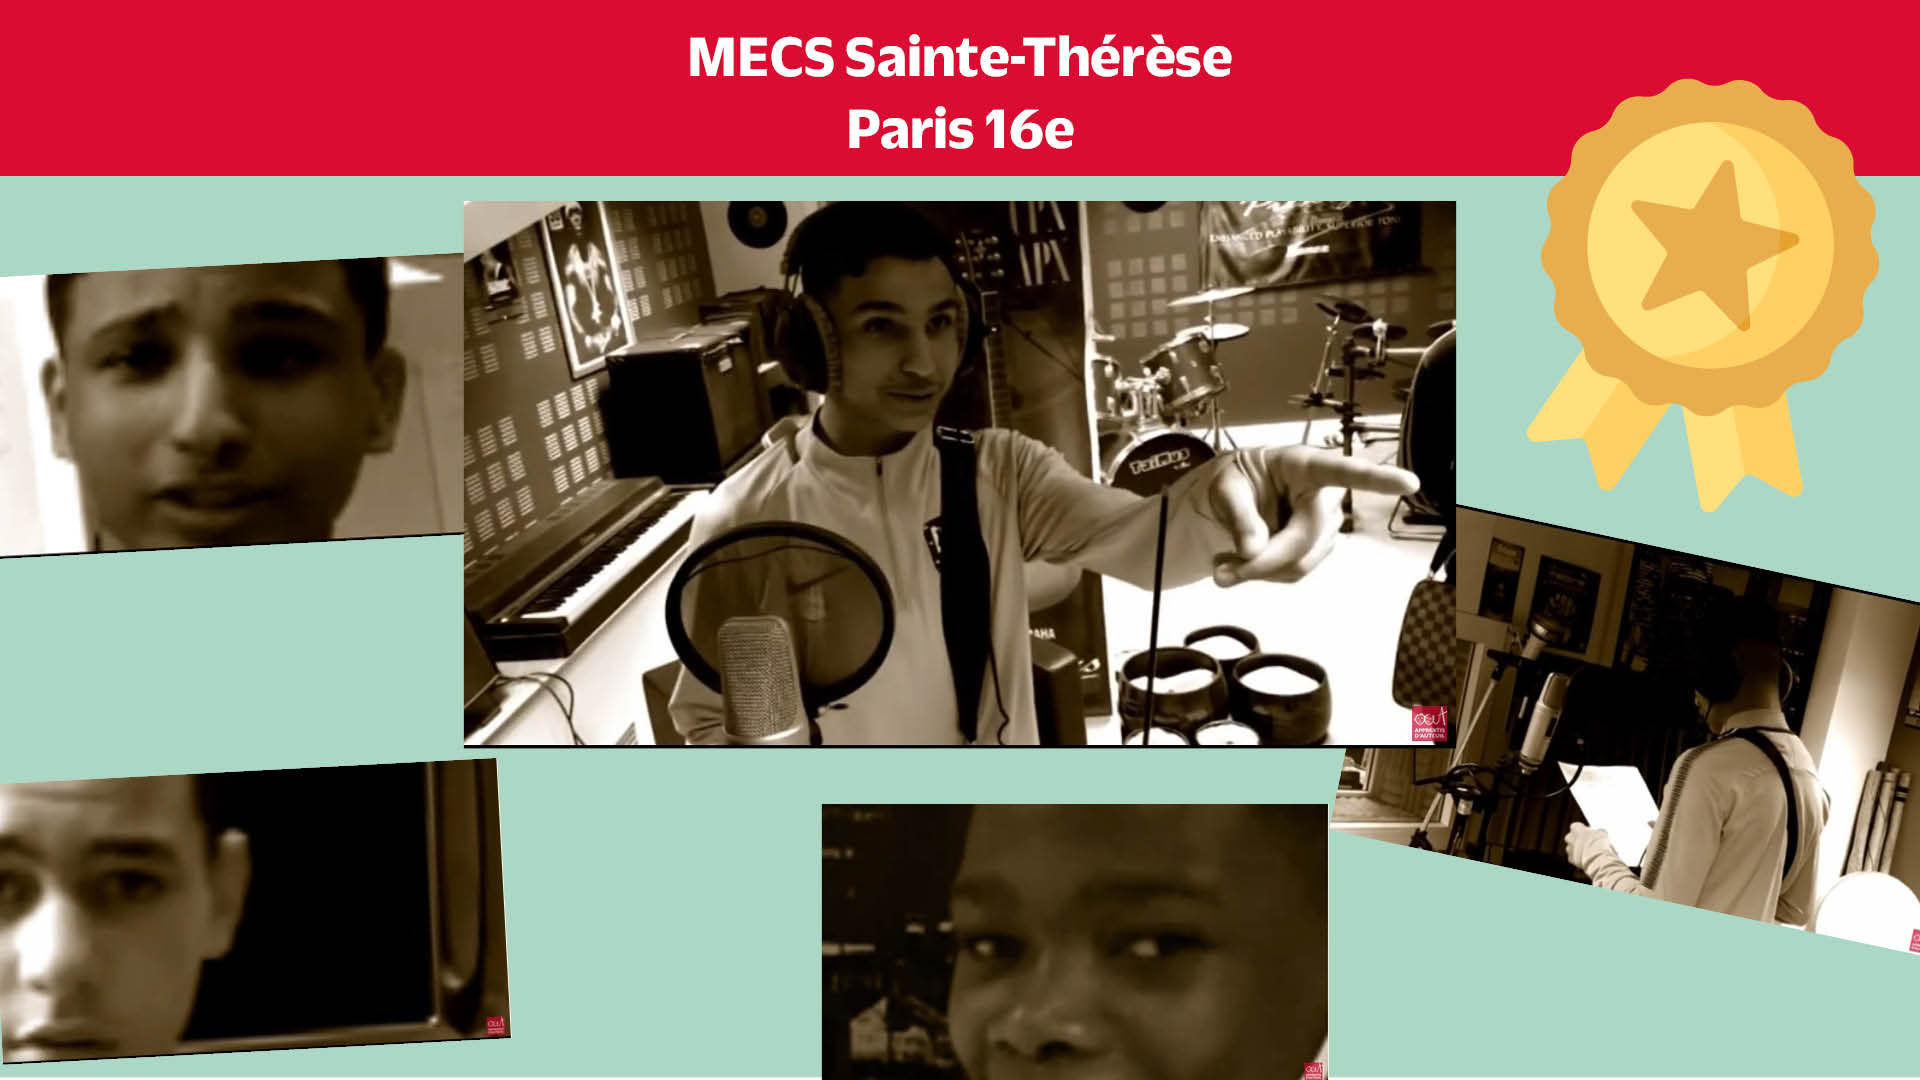 5. MECS Sainte-Thérèse